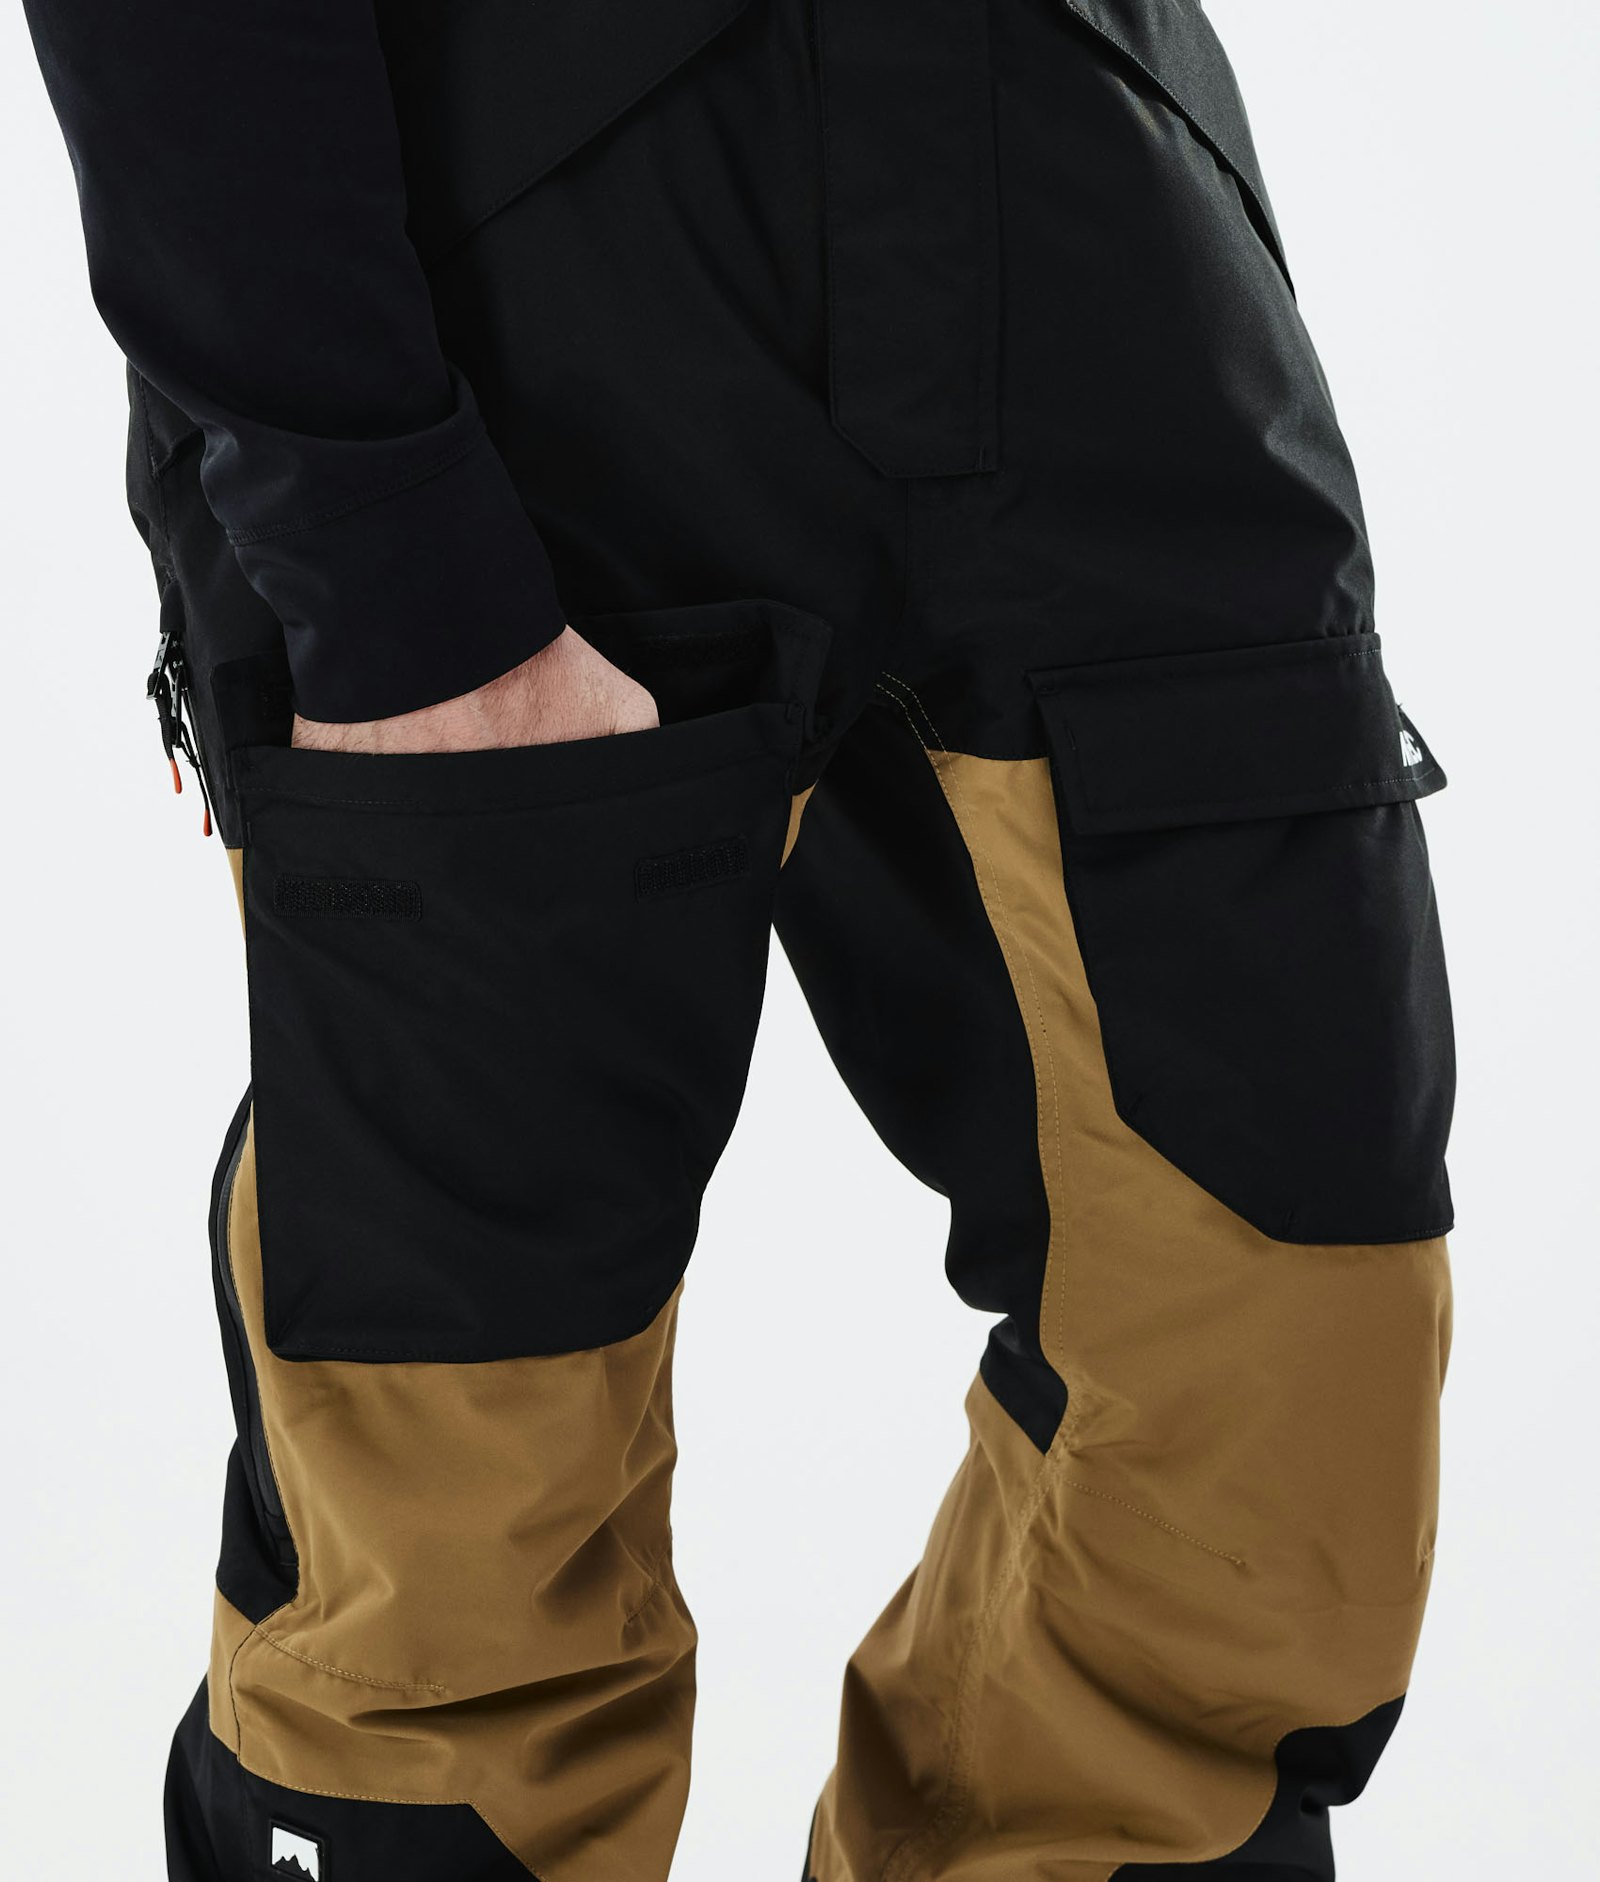 Fawk 2021 Ski Pants Men Black/Gold